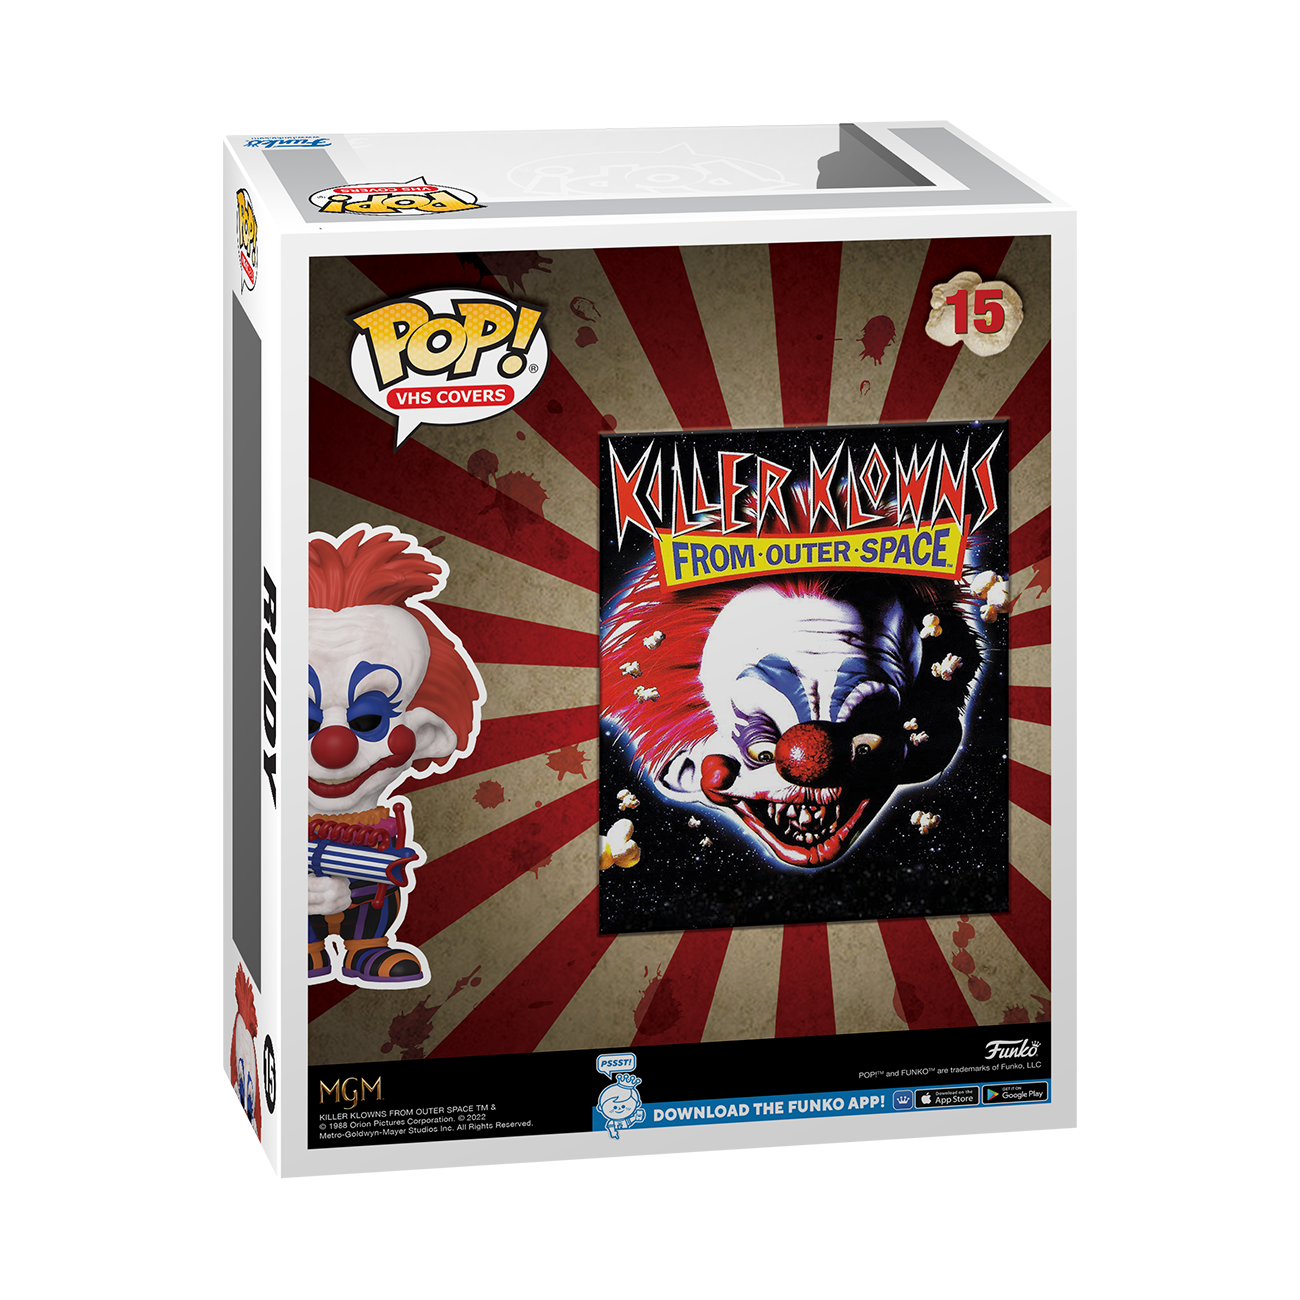 Funko Pop! VHS Cover - Killer Klowns Vinyl Figure (Walmart Exclusive) - image 3 of 6